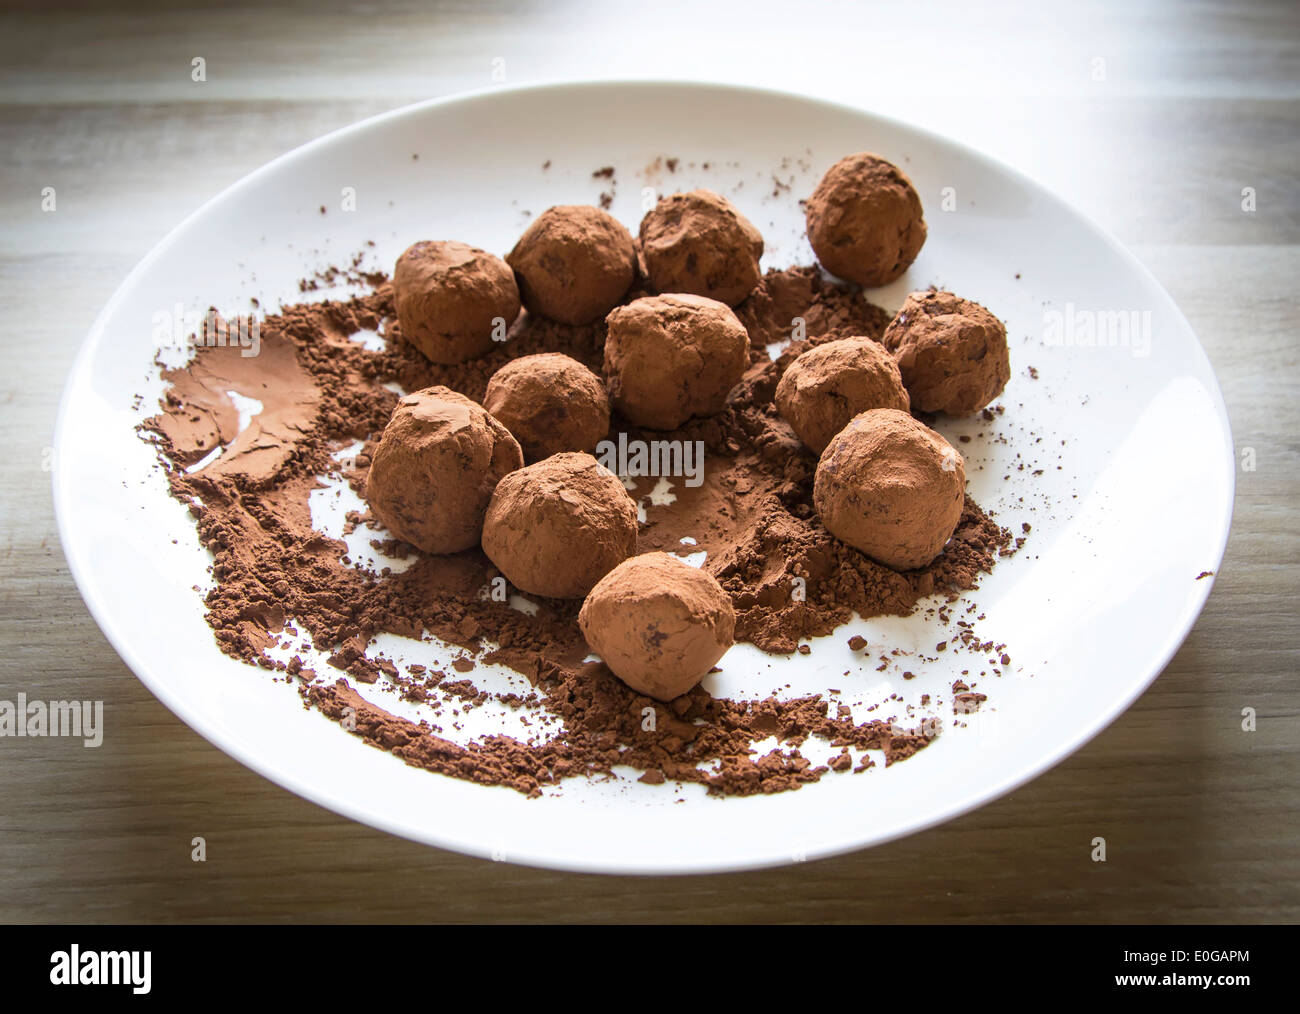 homemade chocolate truffles in cocoa powder on white plate Stock Photo